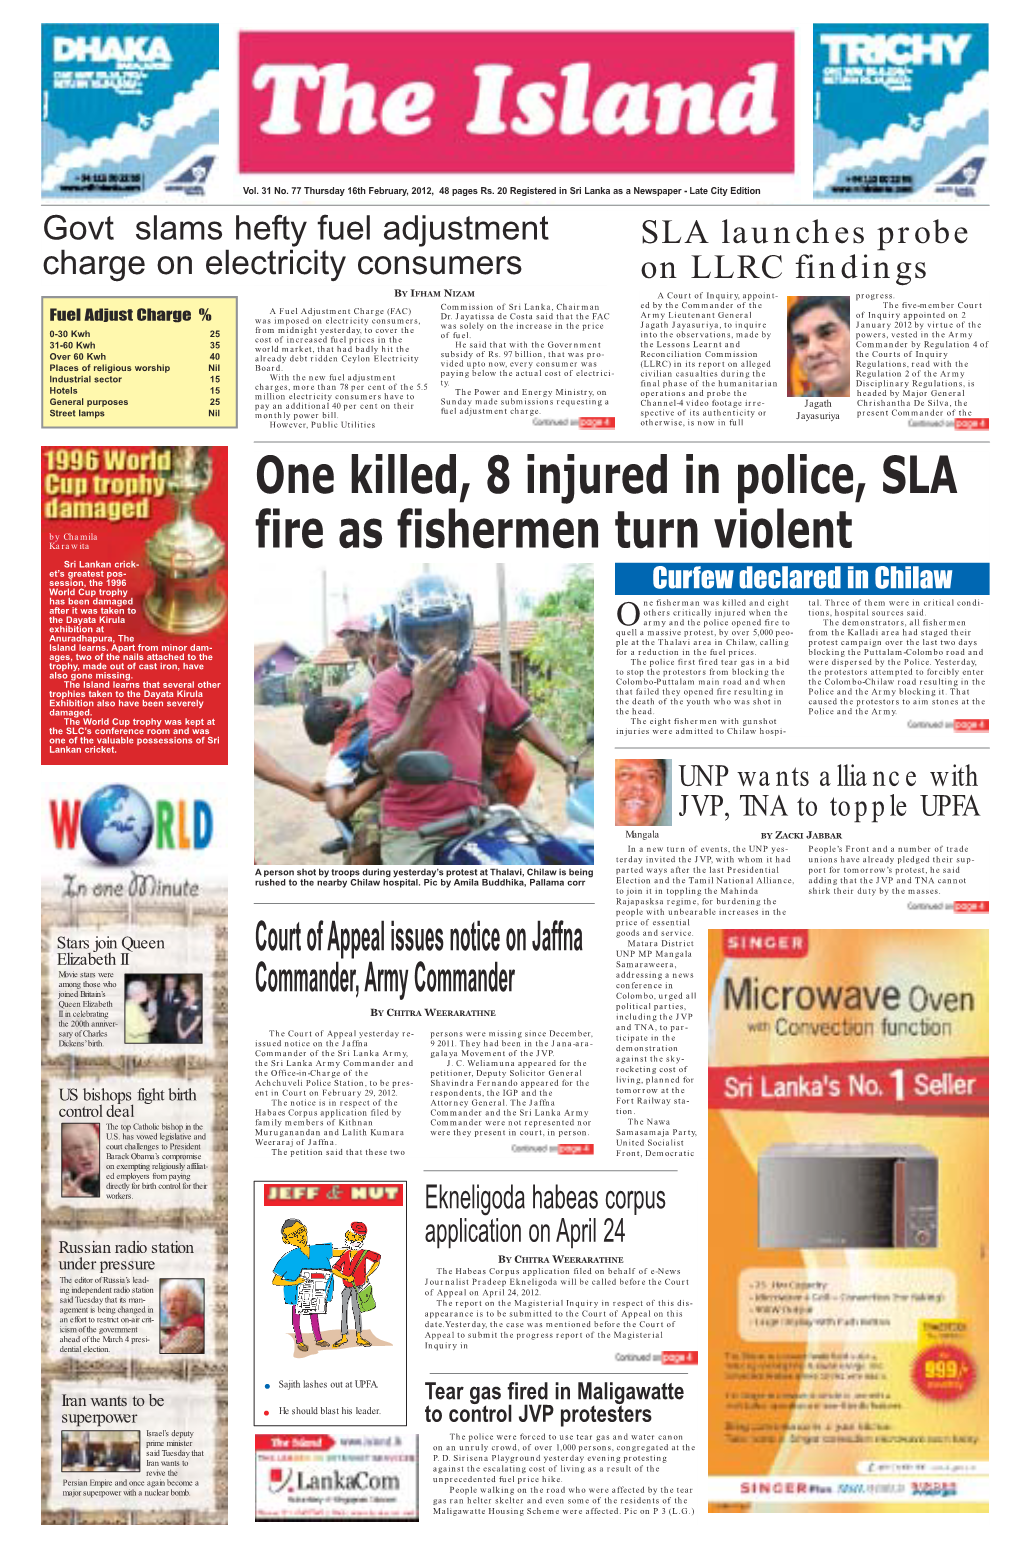 One Killed, 8 Injured in Police, SLA Fire As Fishermen Turn Violent